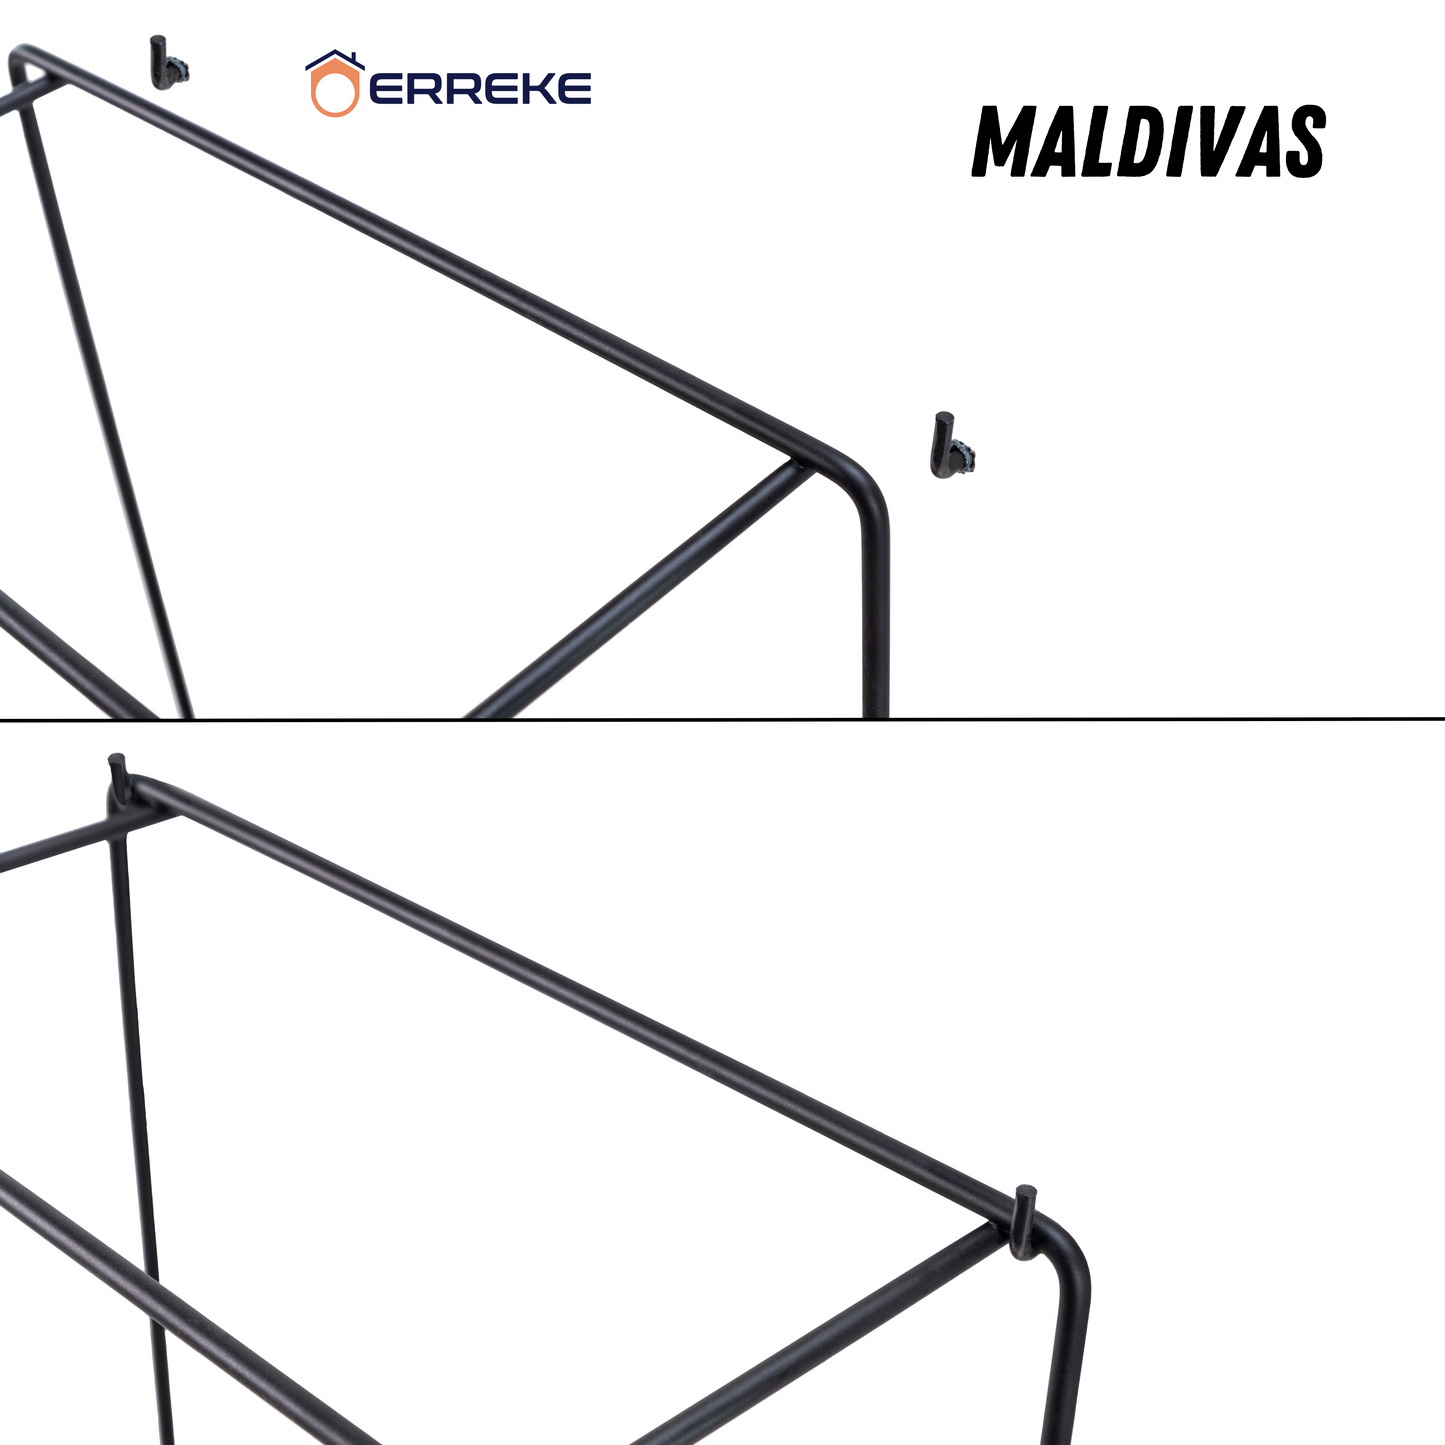 Set of 3 Wall Shelves in Teak Wood and Steel, MALDIVAS, modern and resistant